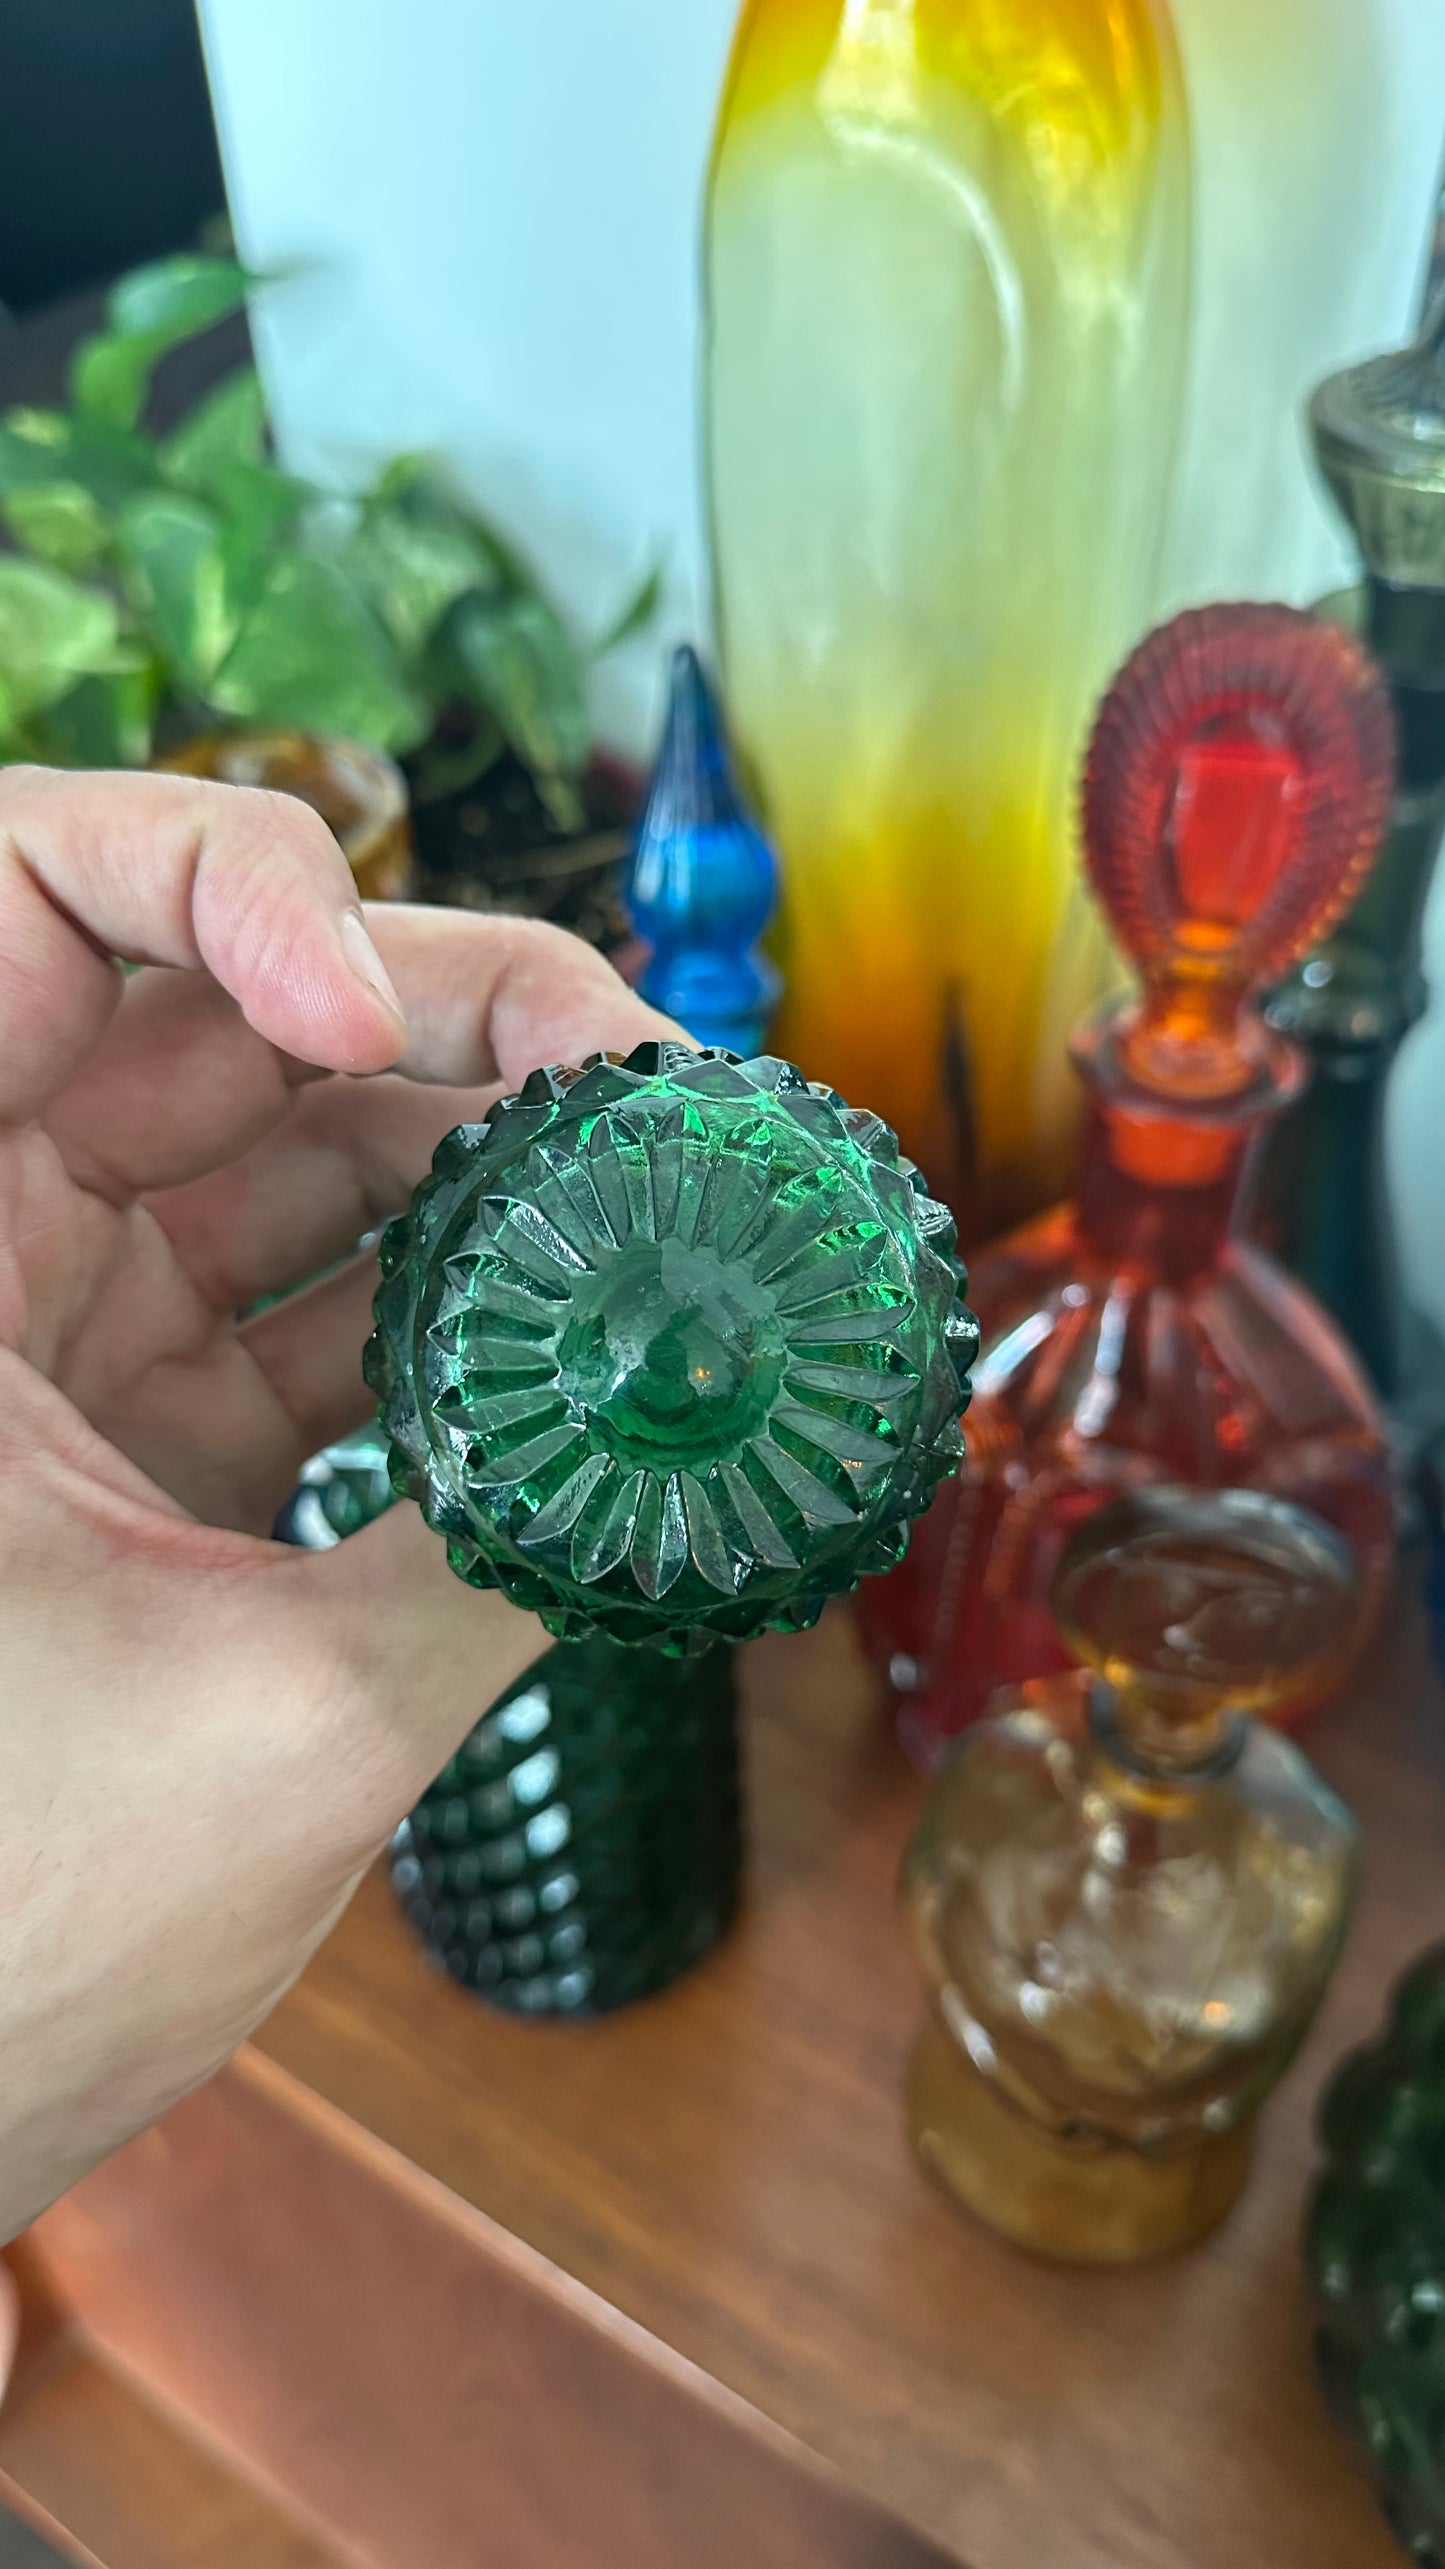 Green Italian Glass Decanter